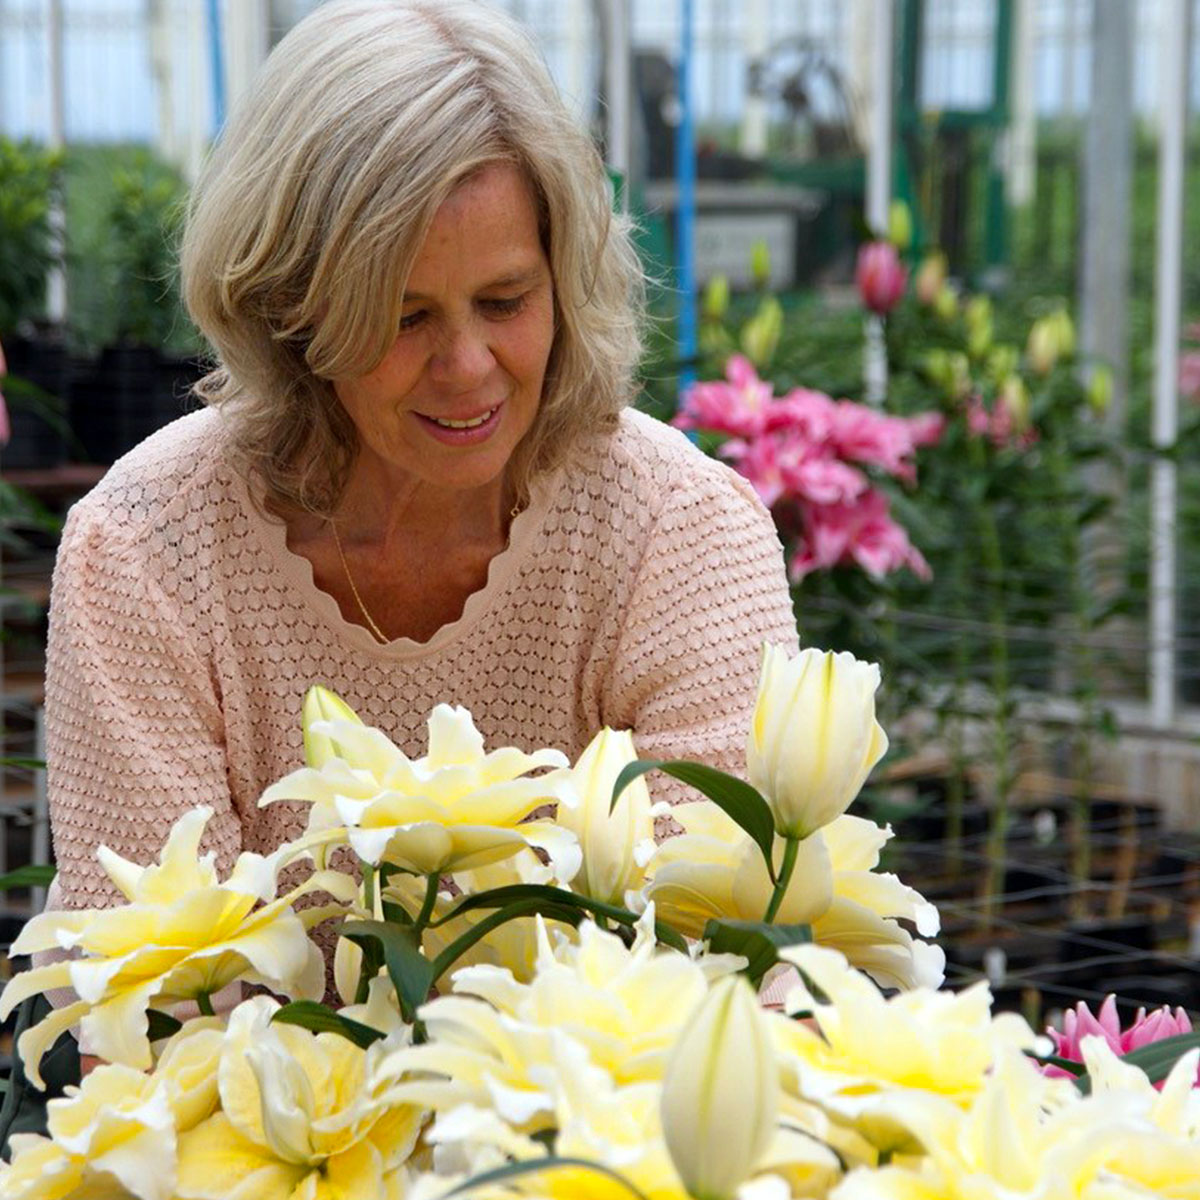 dutch-miss-lily-dorien-van-den-berg-is-passionate-about-roselilies-featured